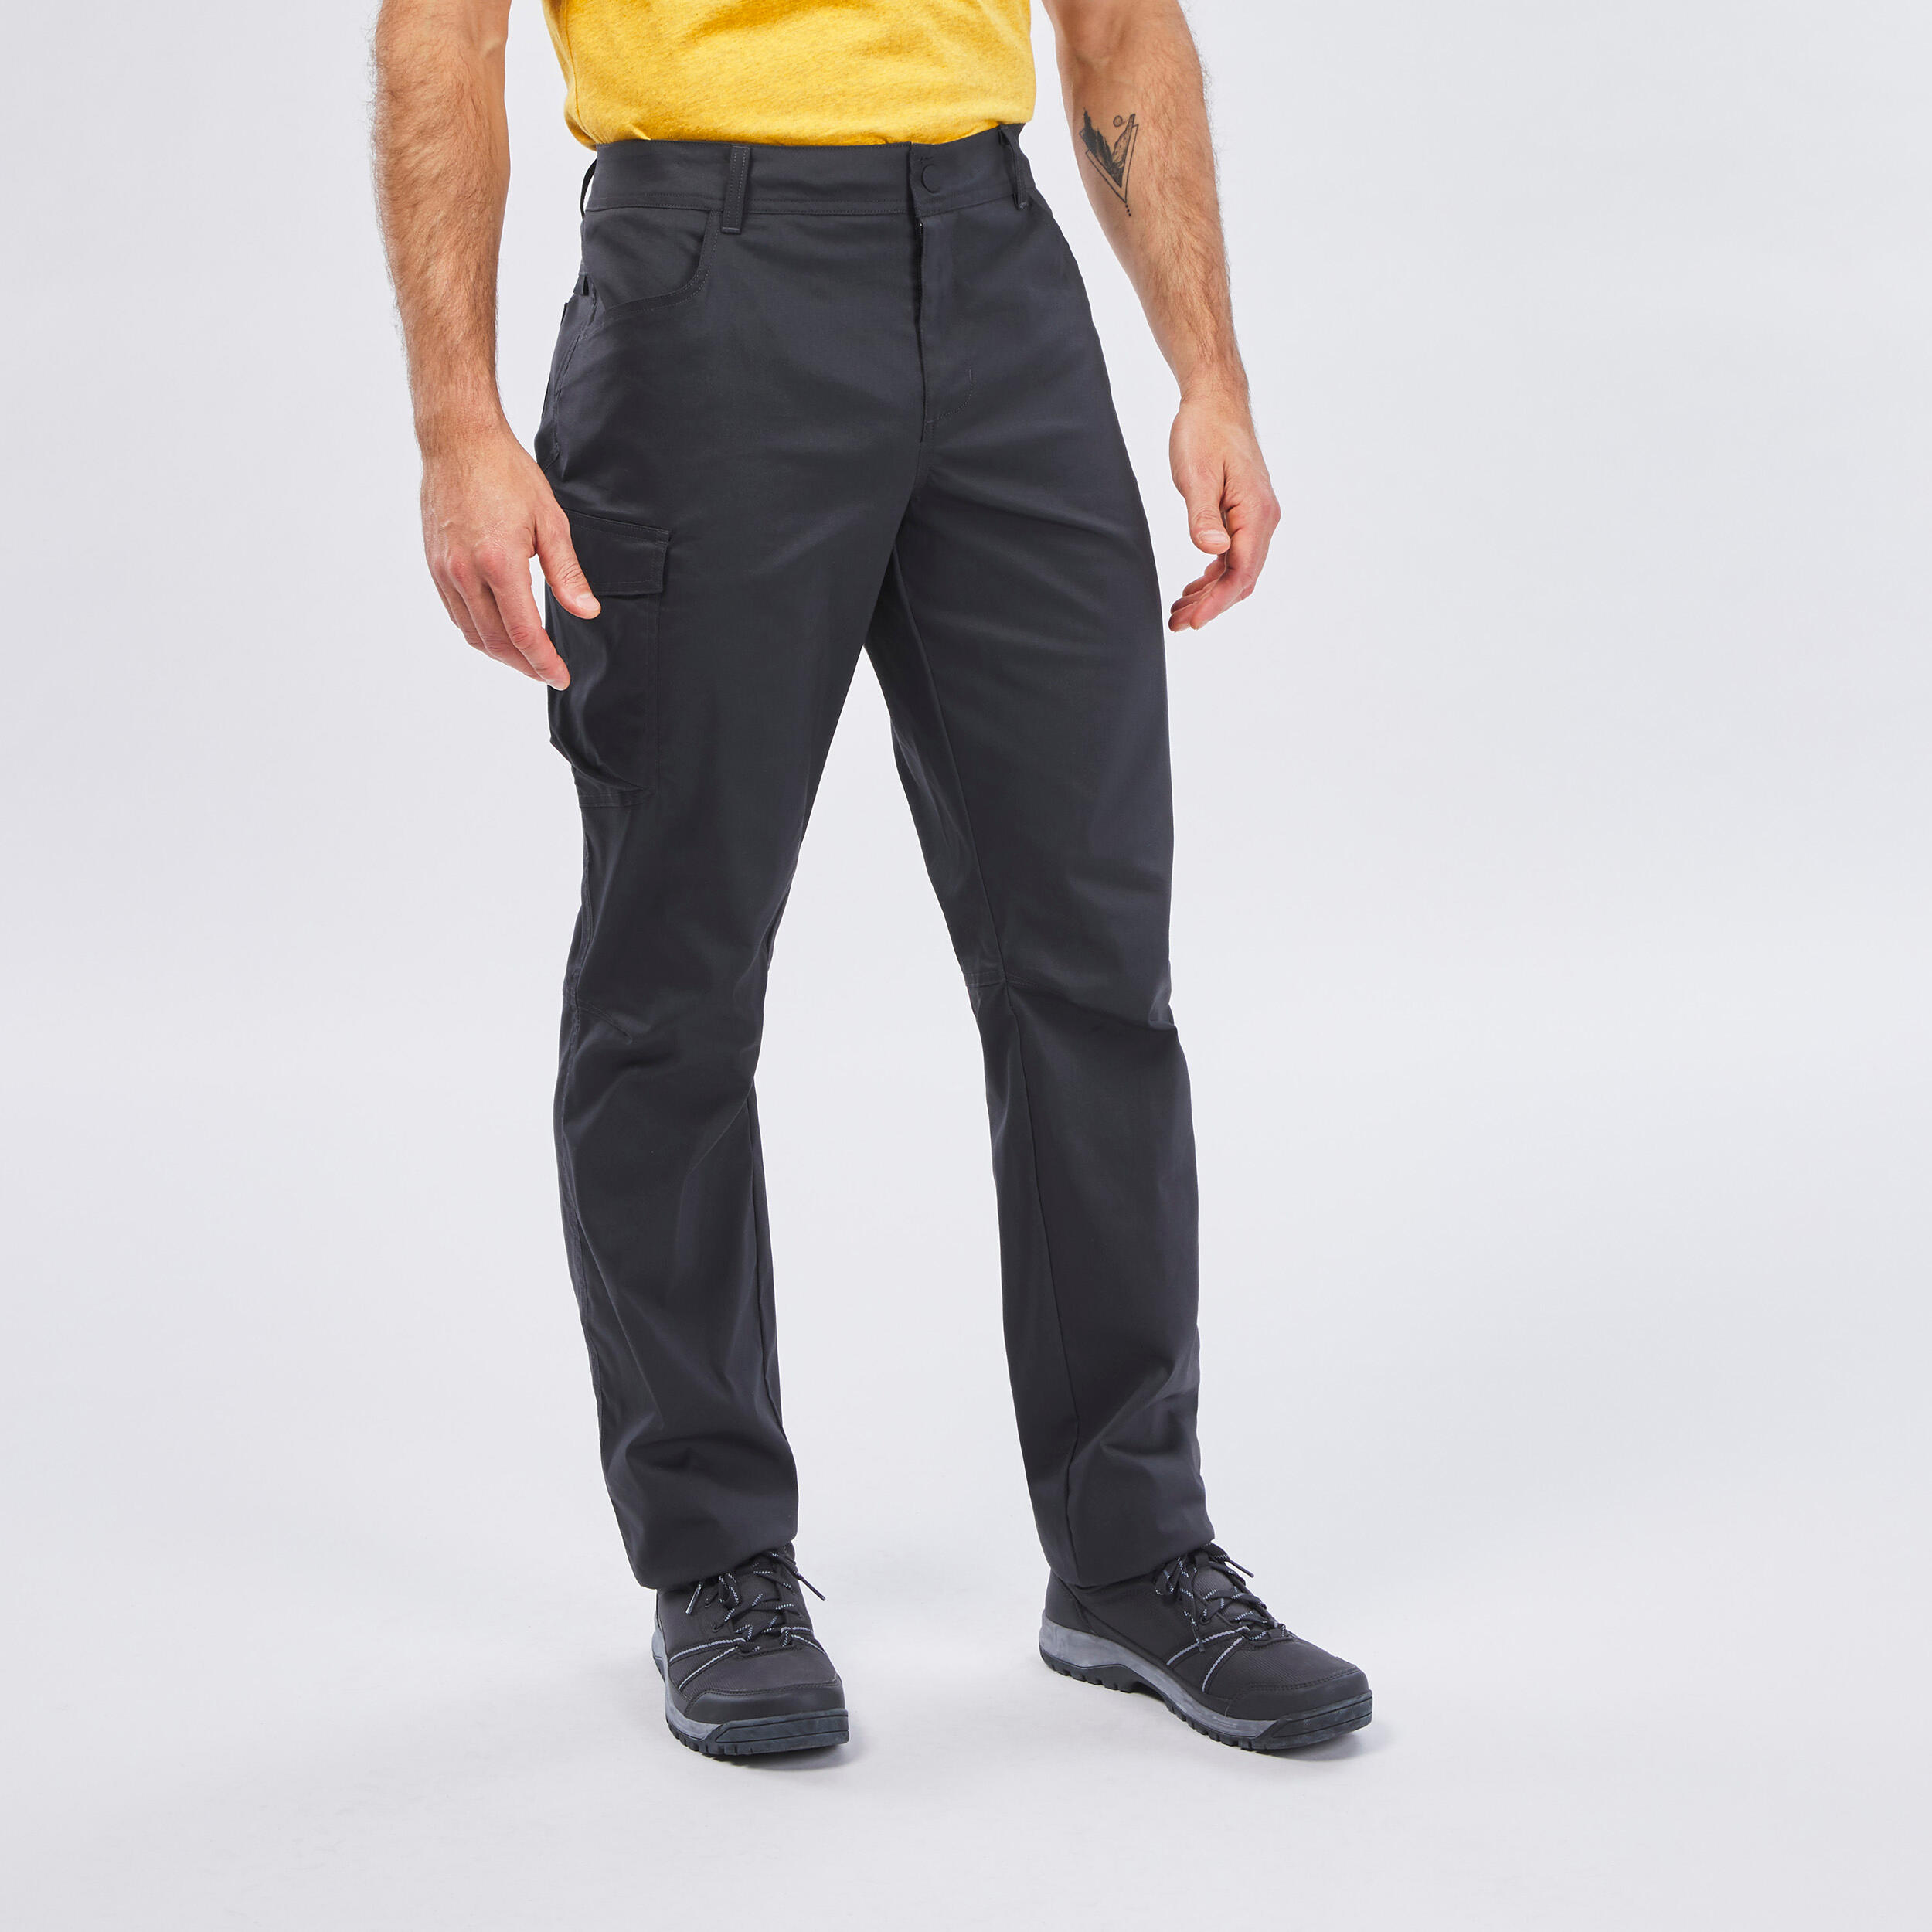 Dickies Everyday Black Workwear Trouser - Waist Size 26